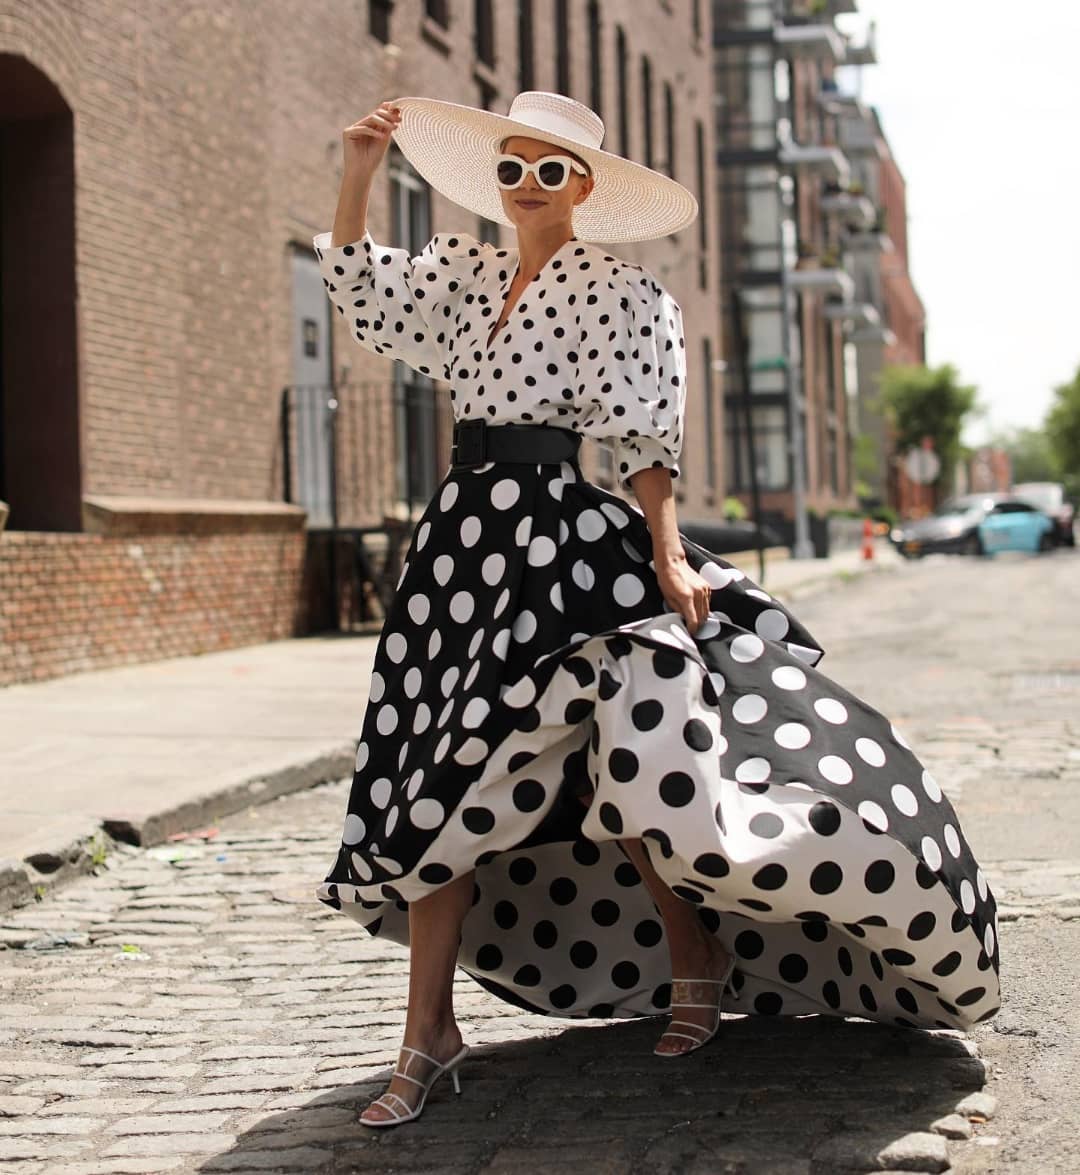 Styling Polka dots dresses by Blair Eadie | Melody Jacob